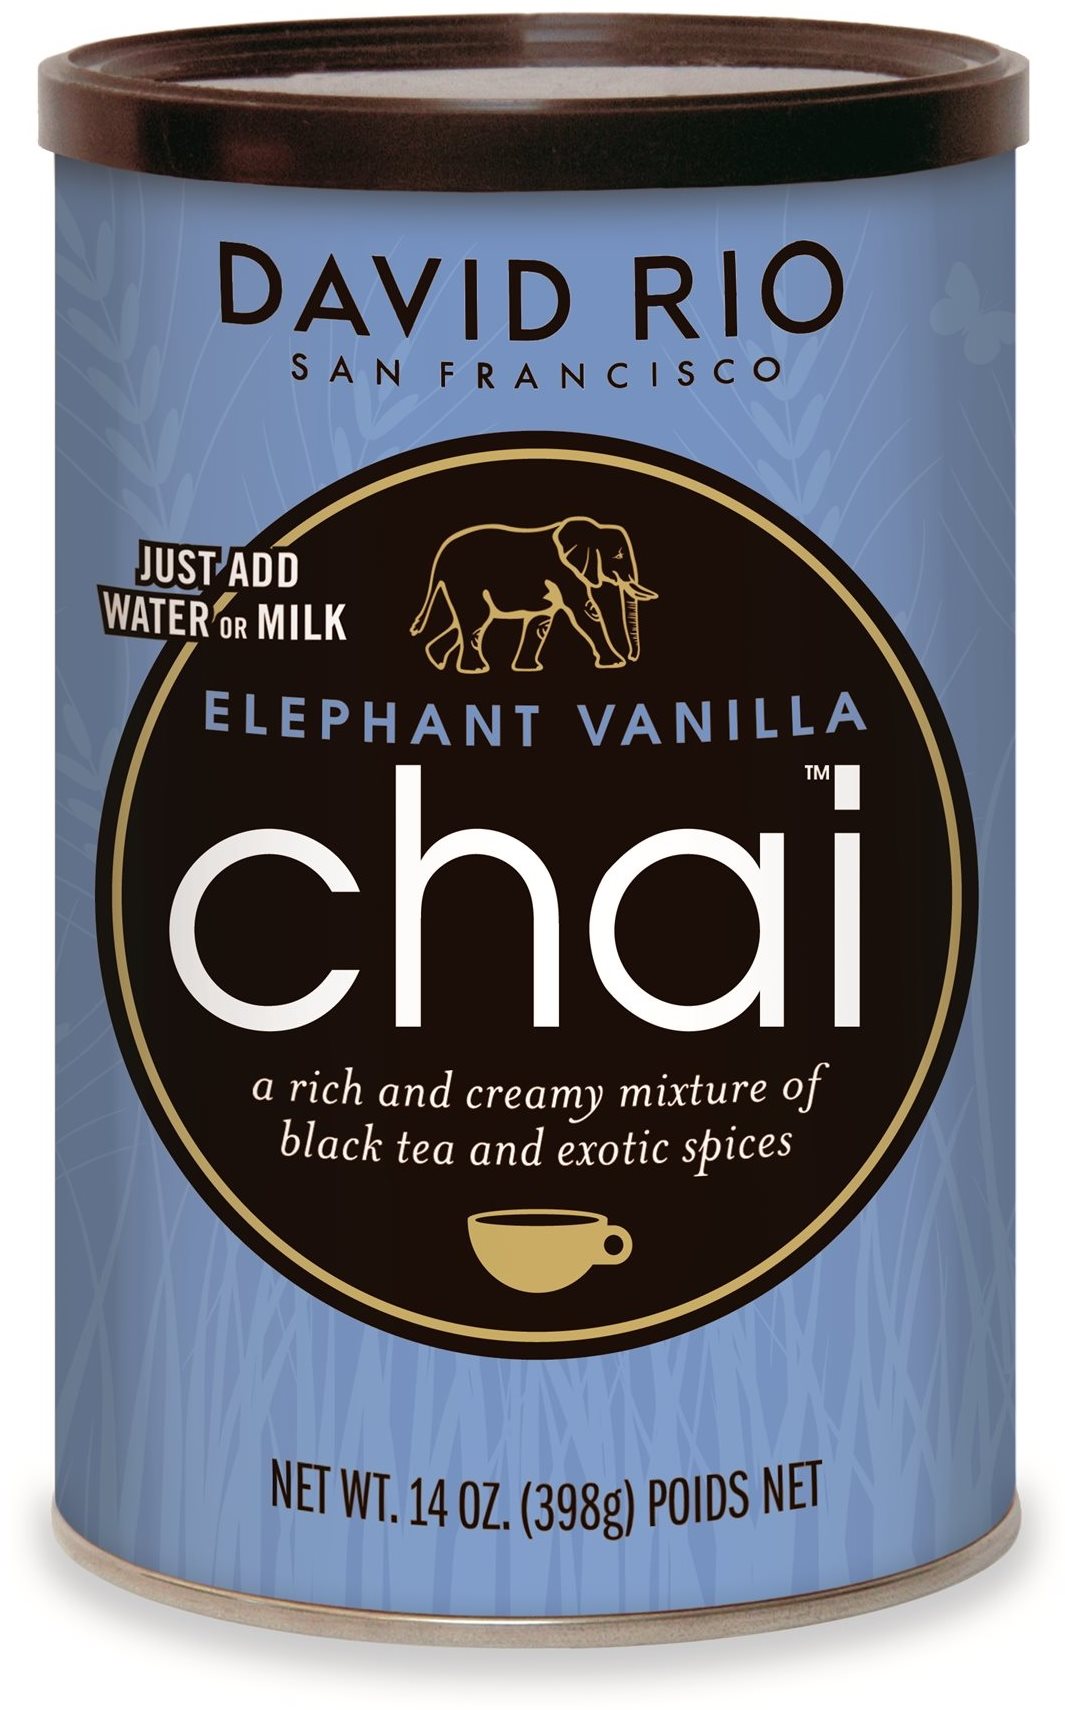 Ital David Rio Chai Elephant Vanilla 398 g